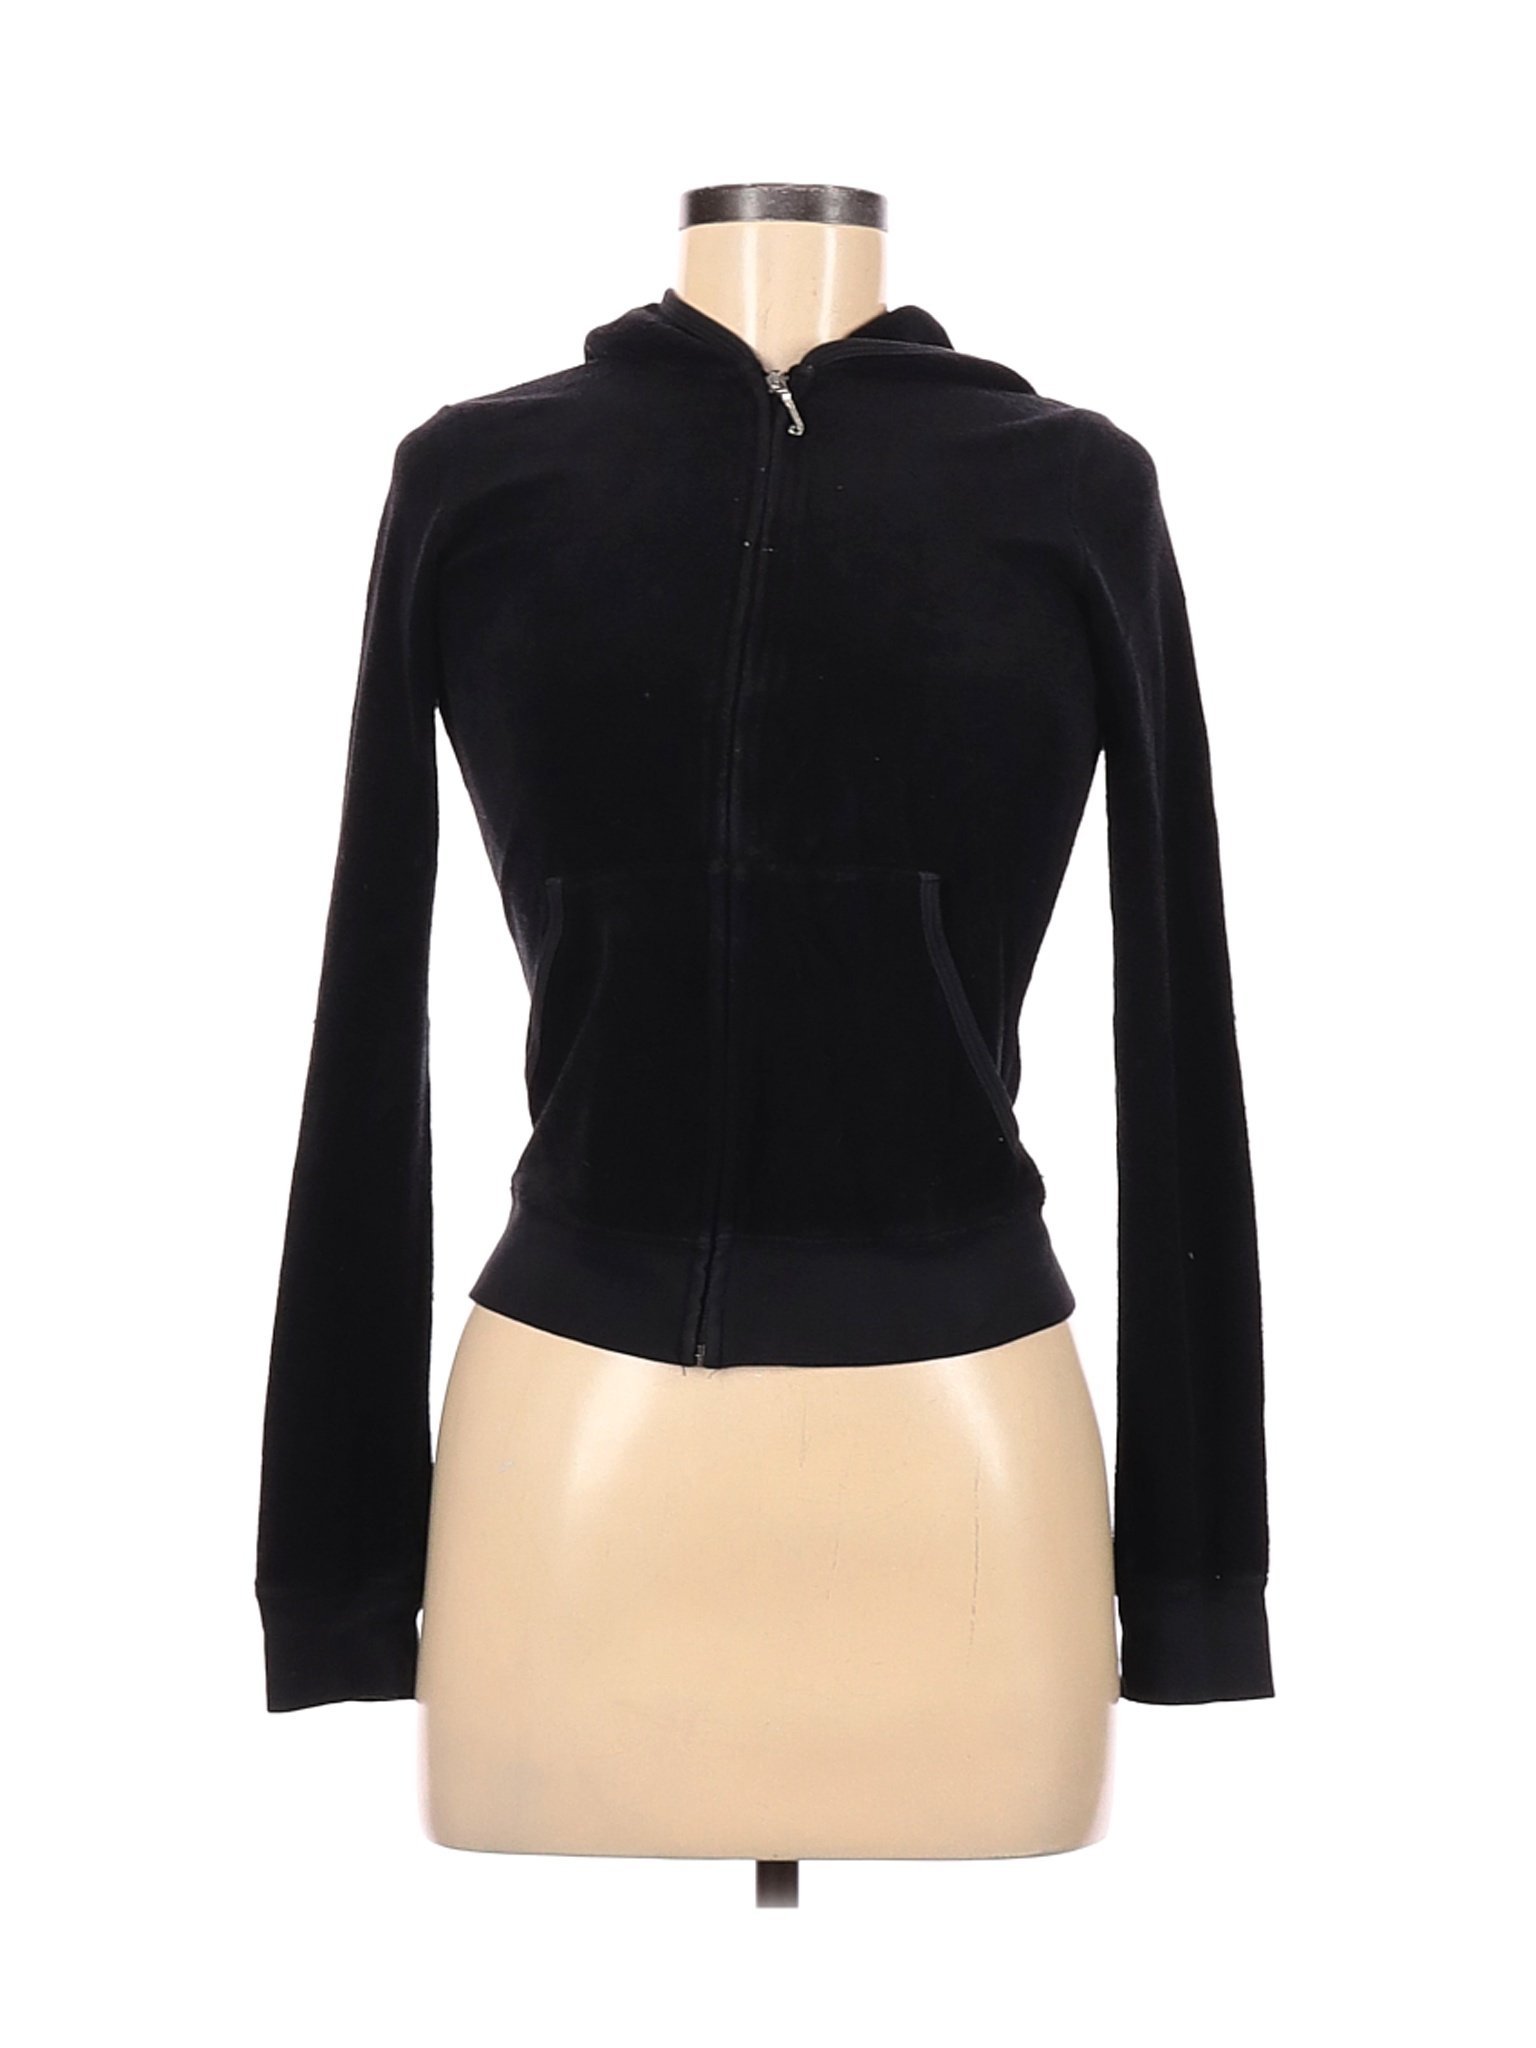 Juicy Couture Women Black Zip Up Hoodie P | eBay